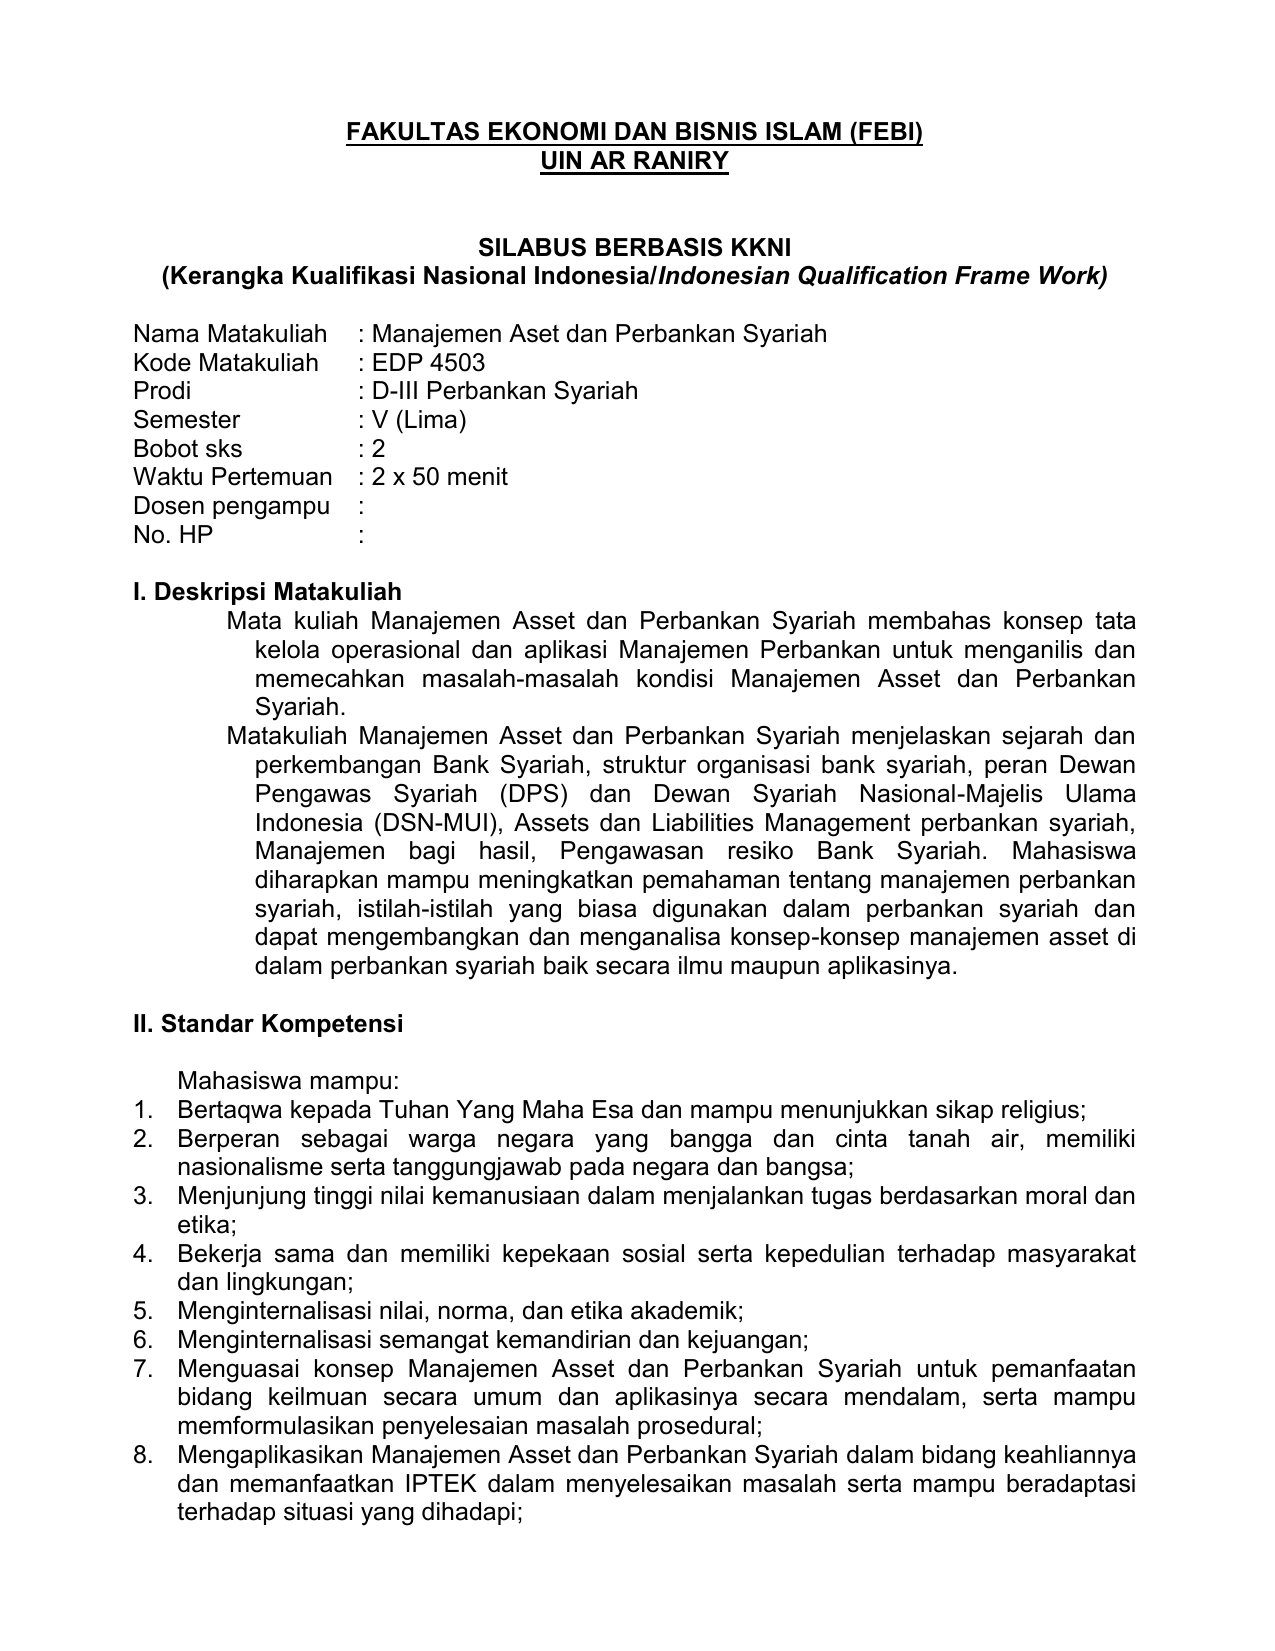 Nasional Indonesia Indonesian Qualification Frame Work Nama Matakuliah Kode Matakuliah Prodi Semester Bobot sks Waktu Pertemuan Dosen pengampu No